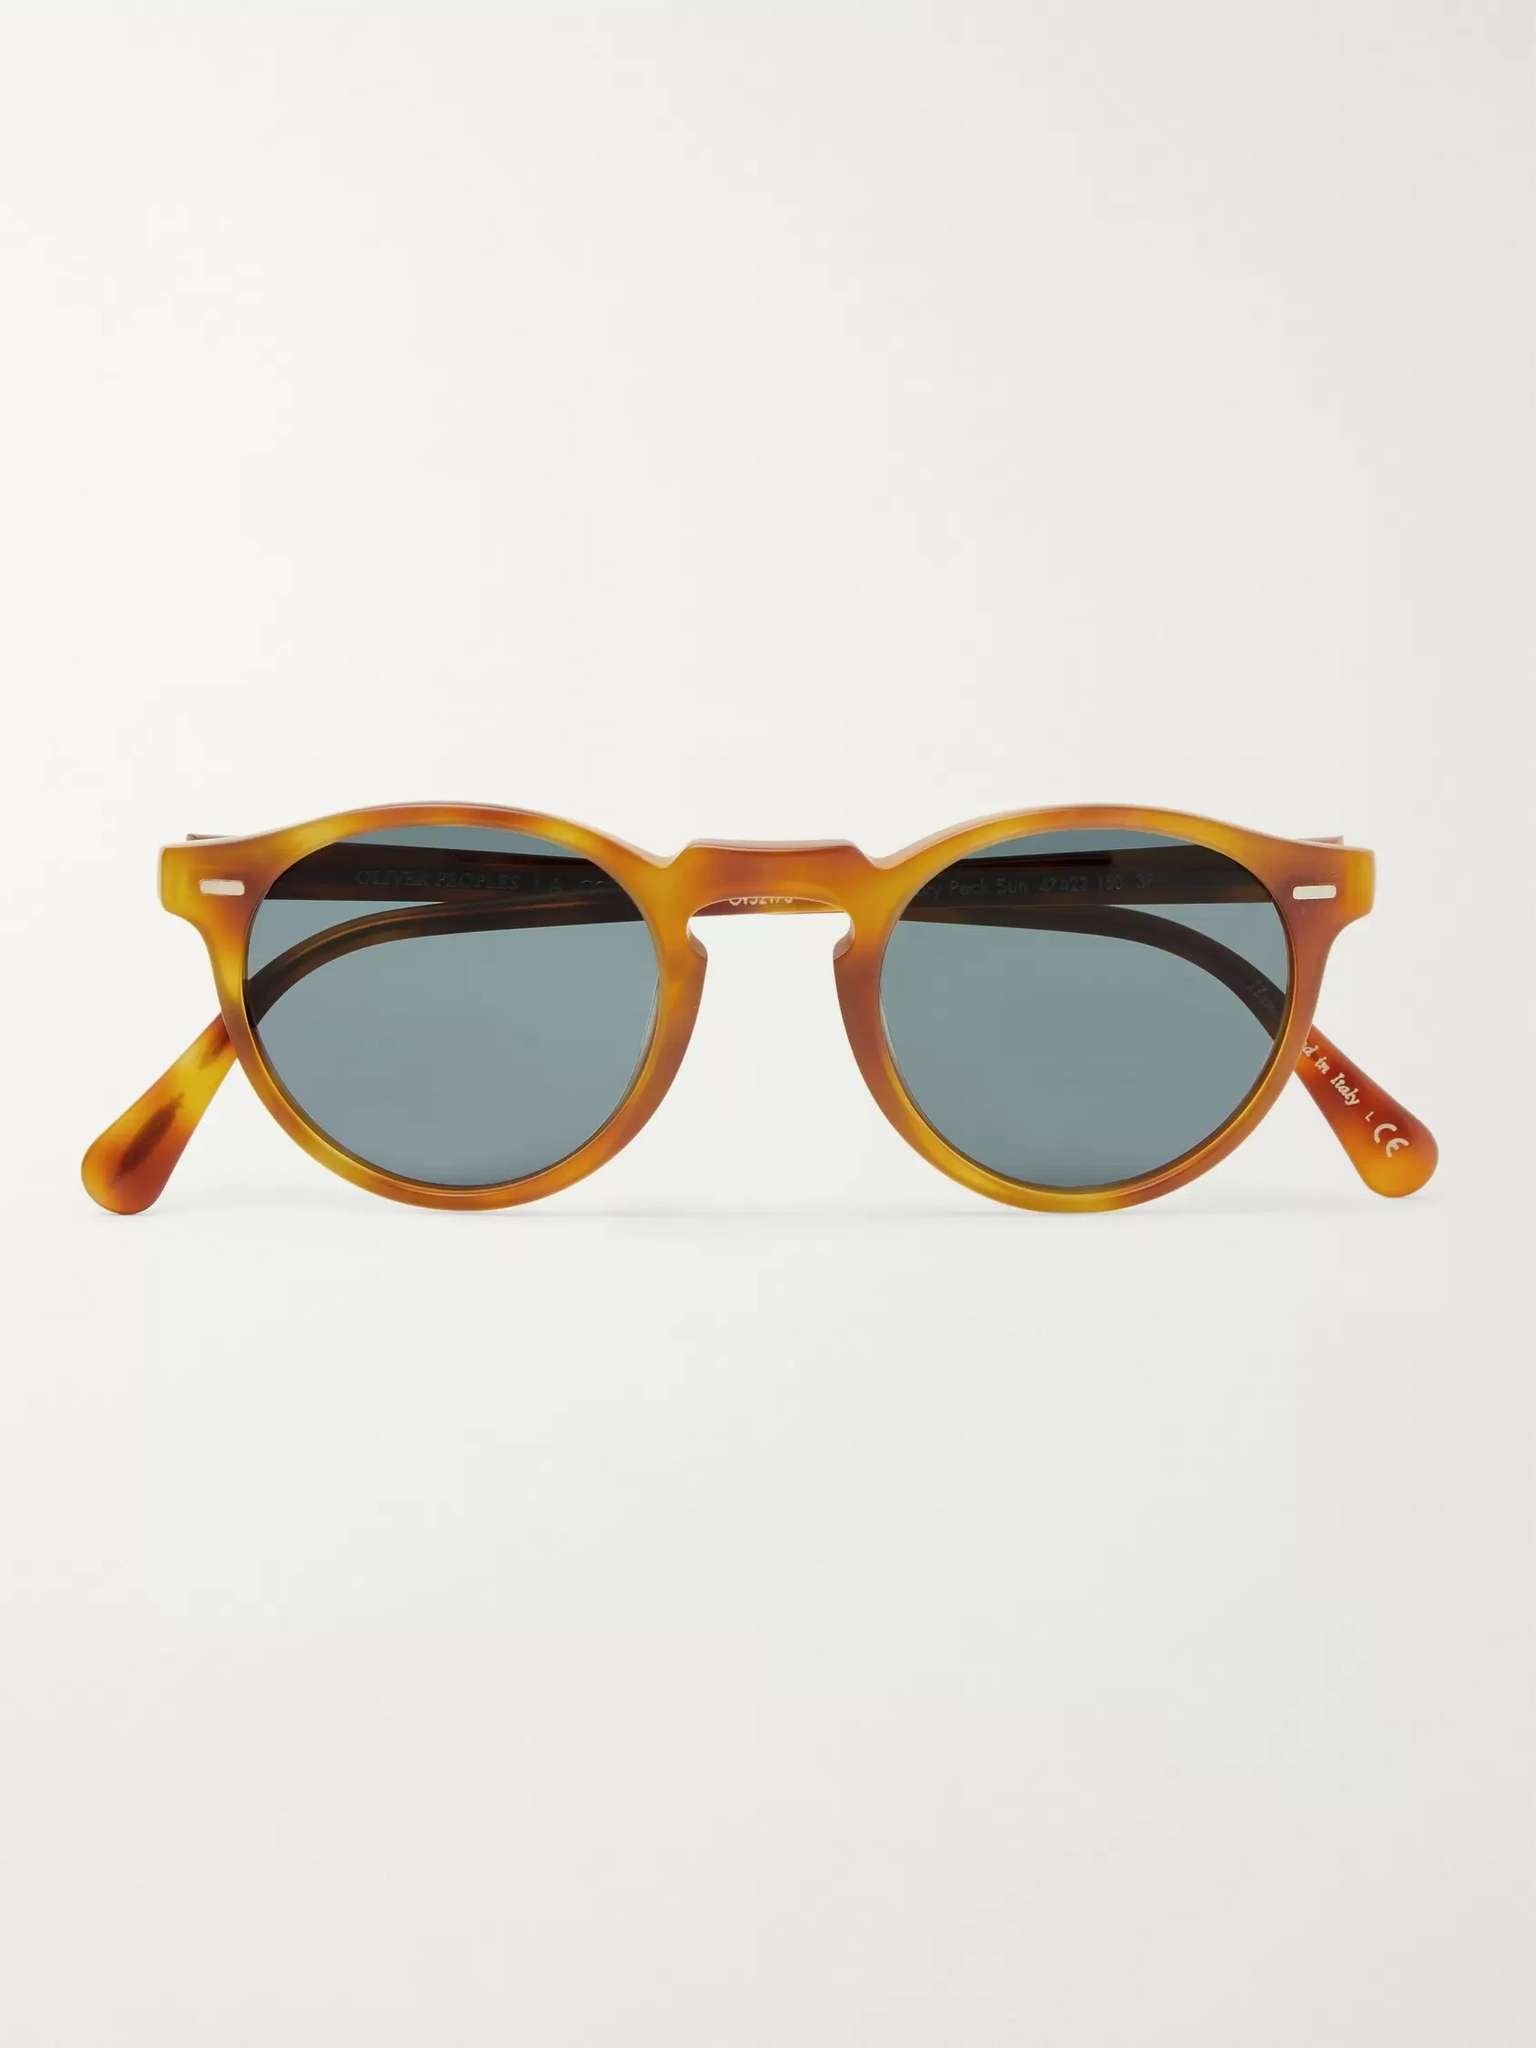 Gregory Peck Round-Frame Acetate Photochromic Sunglasses - 1